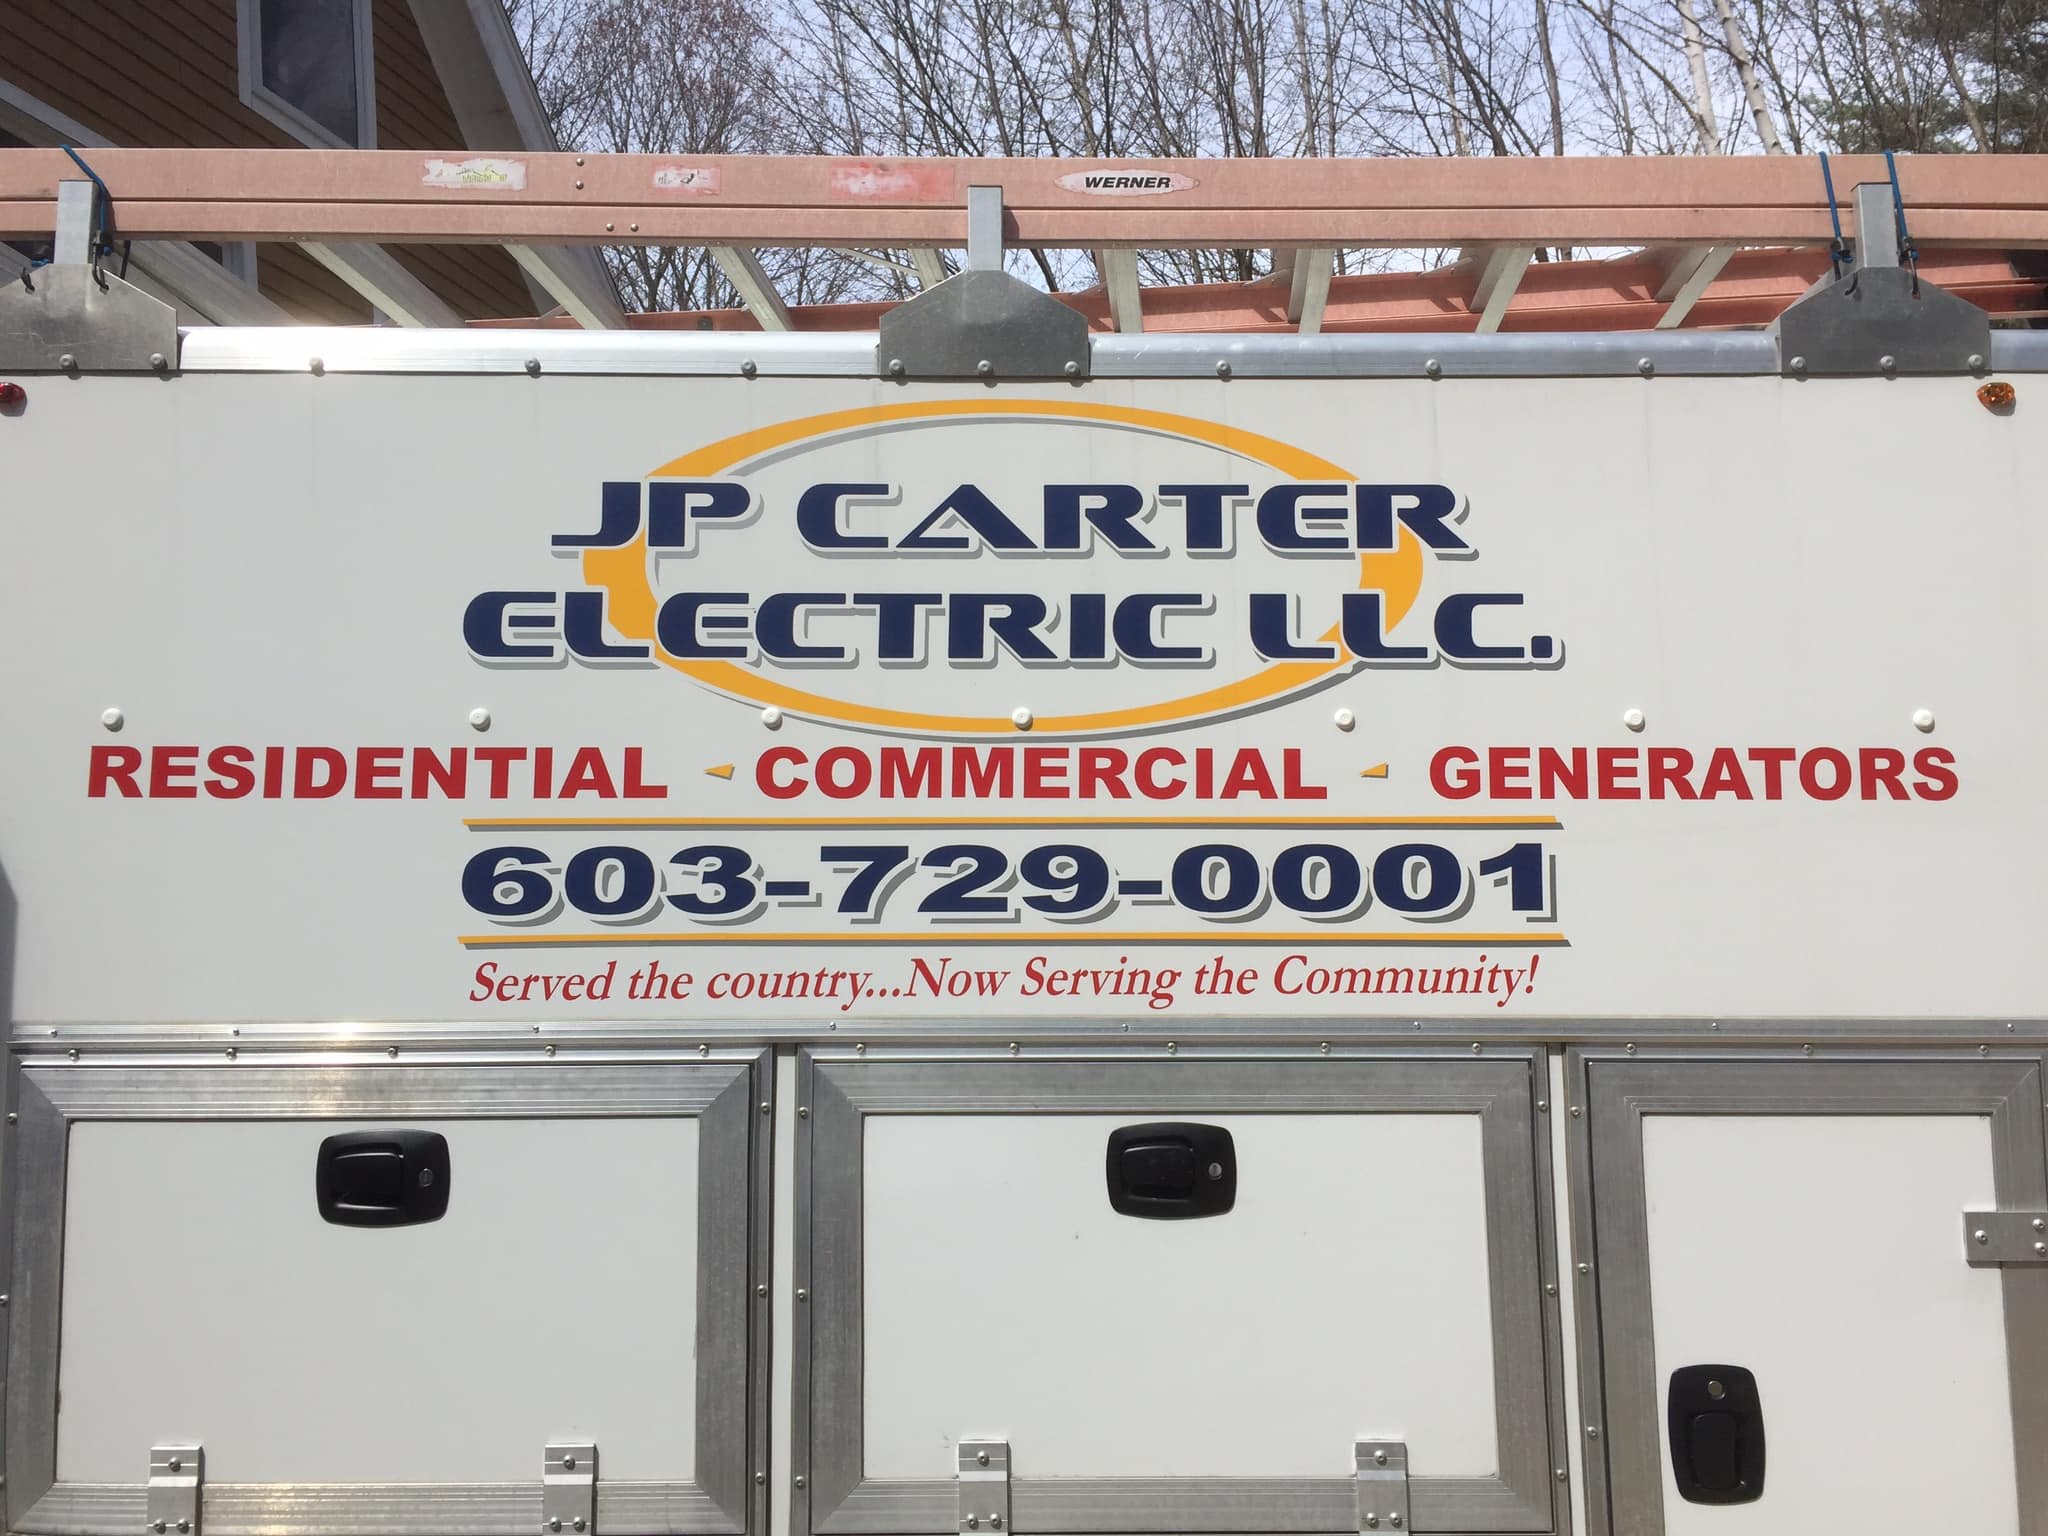 JP Carter Electric, LLC - Northfield, NH, US, an electrical